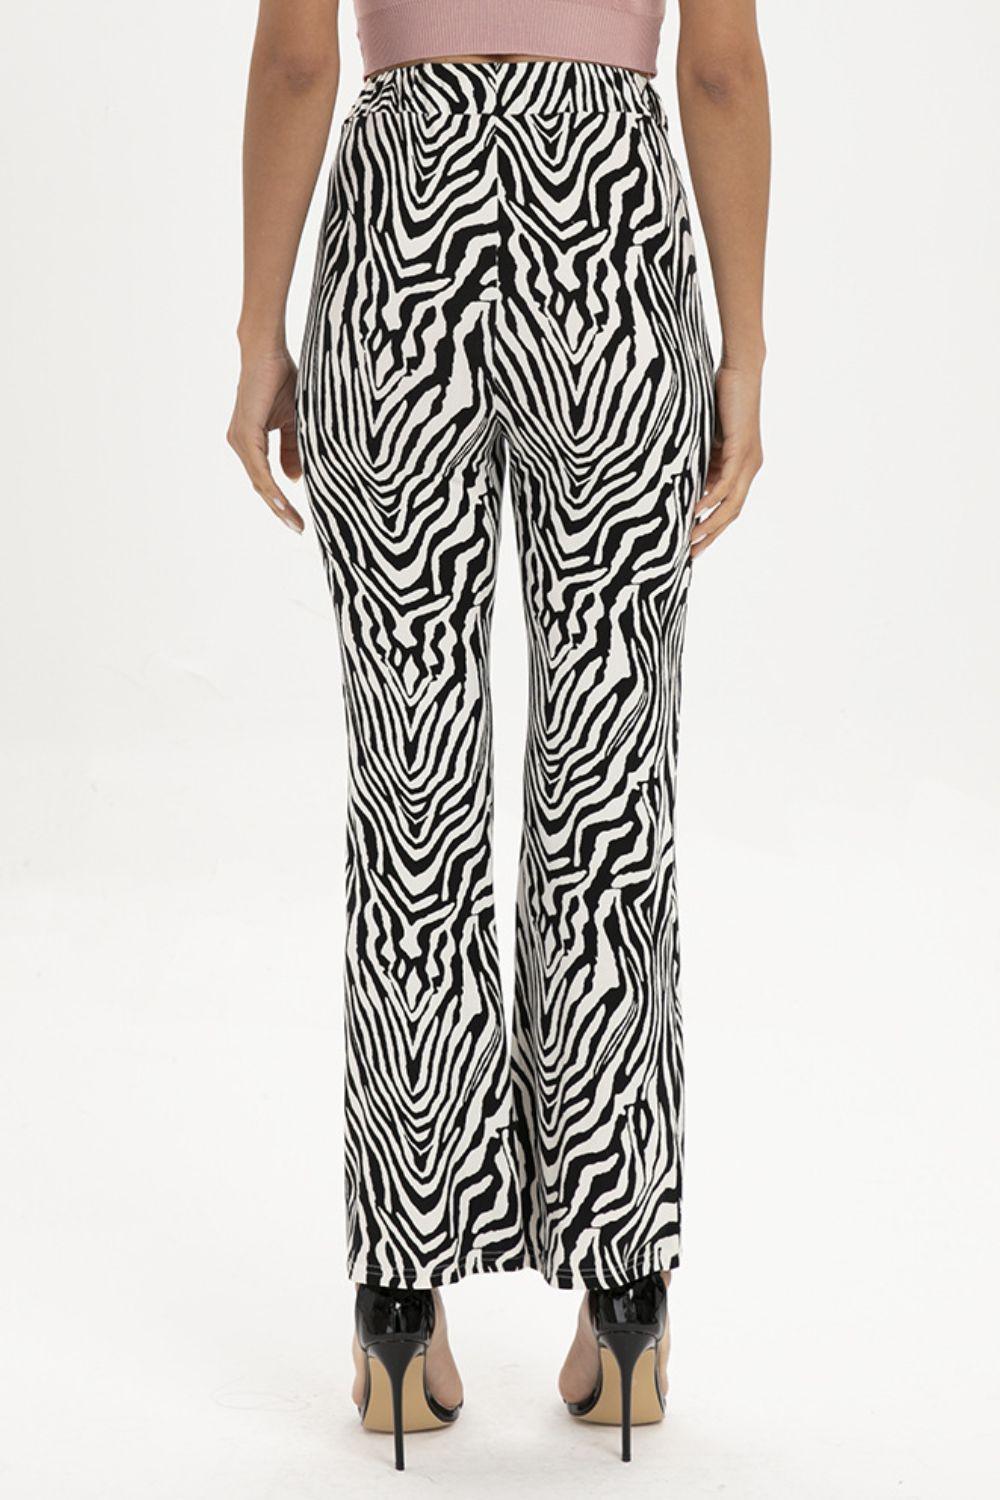 Zebra Print Straight Leg Pants - BELLATRENDZ